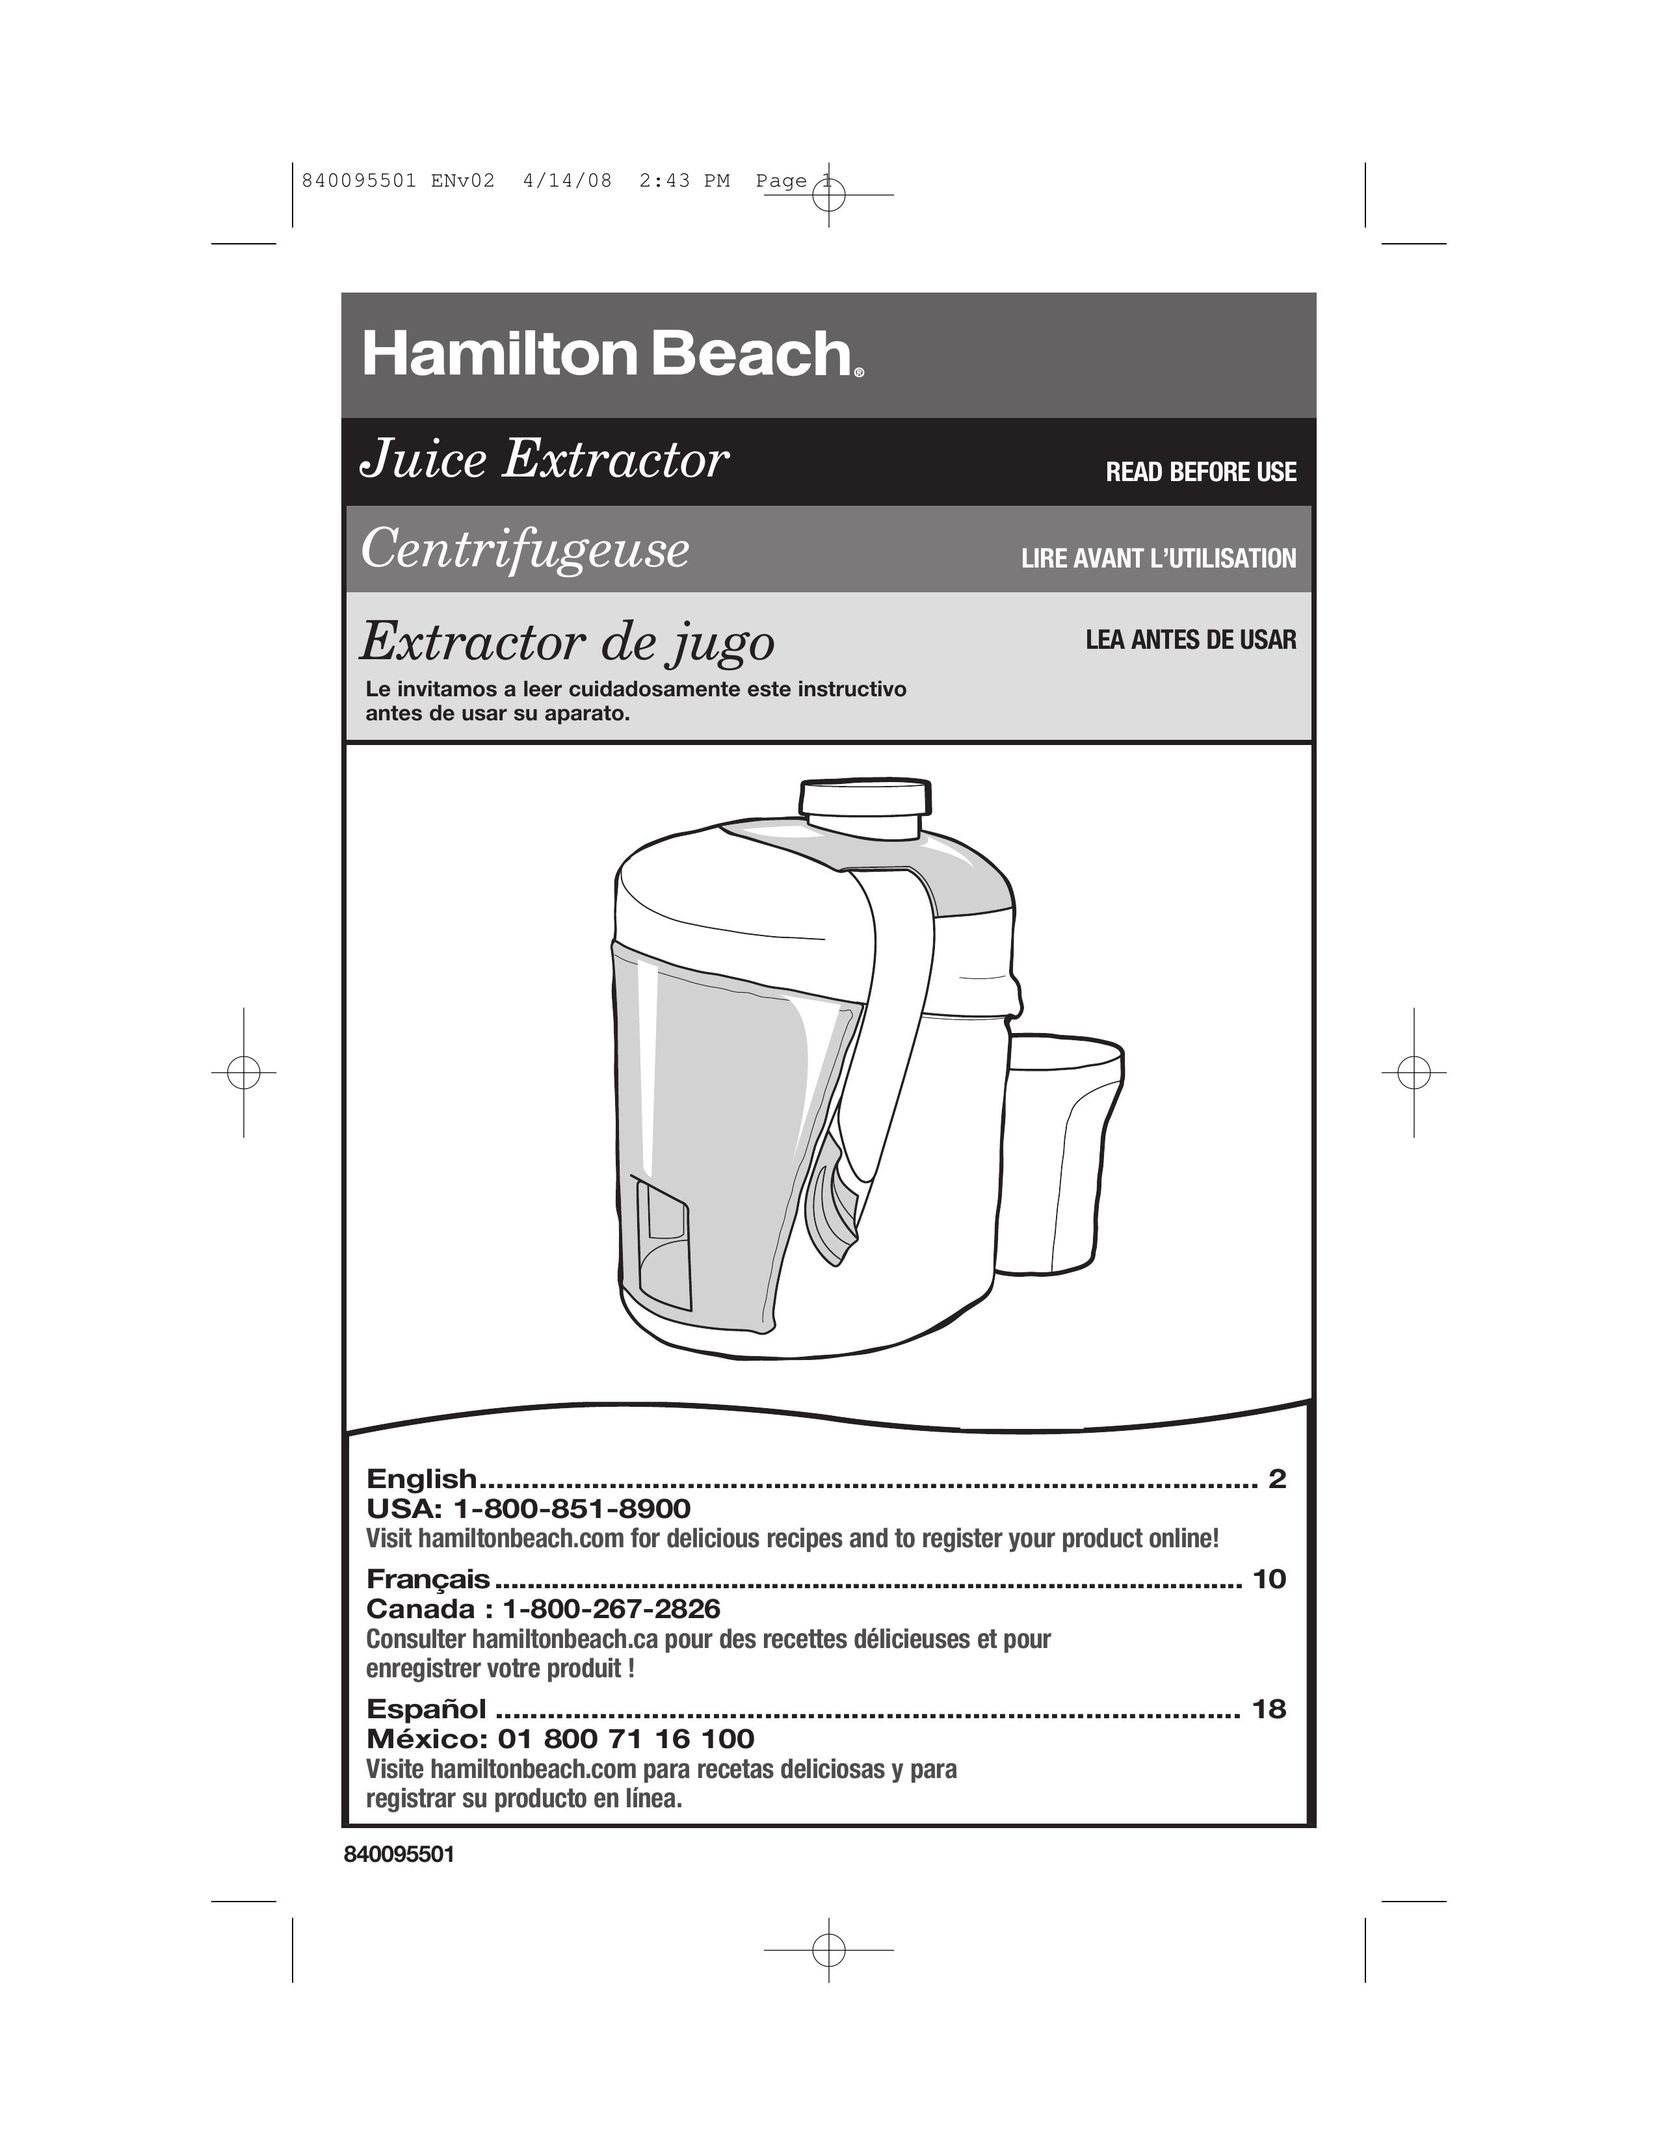 Hamilton Beach 840095501 Juicer User Manual